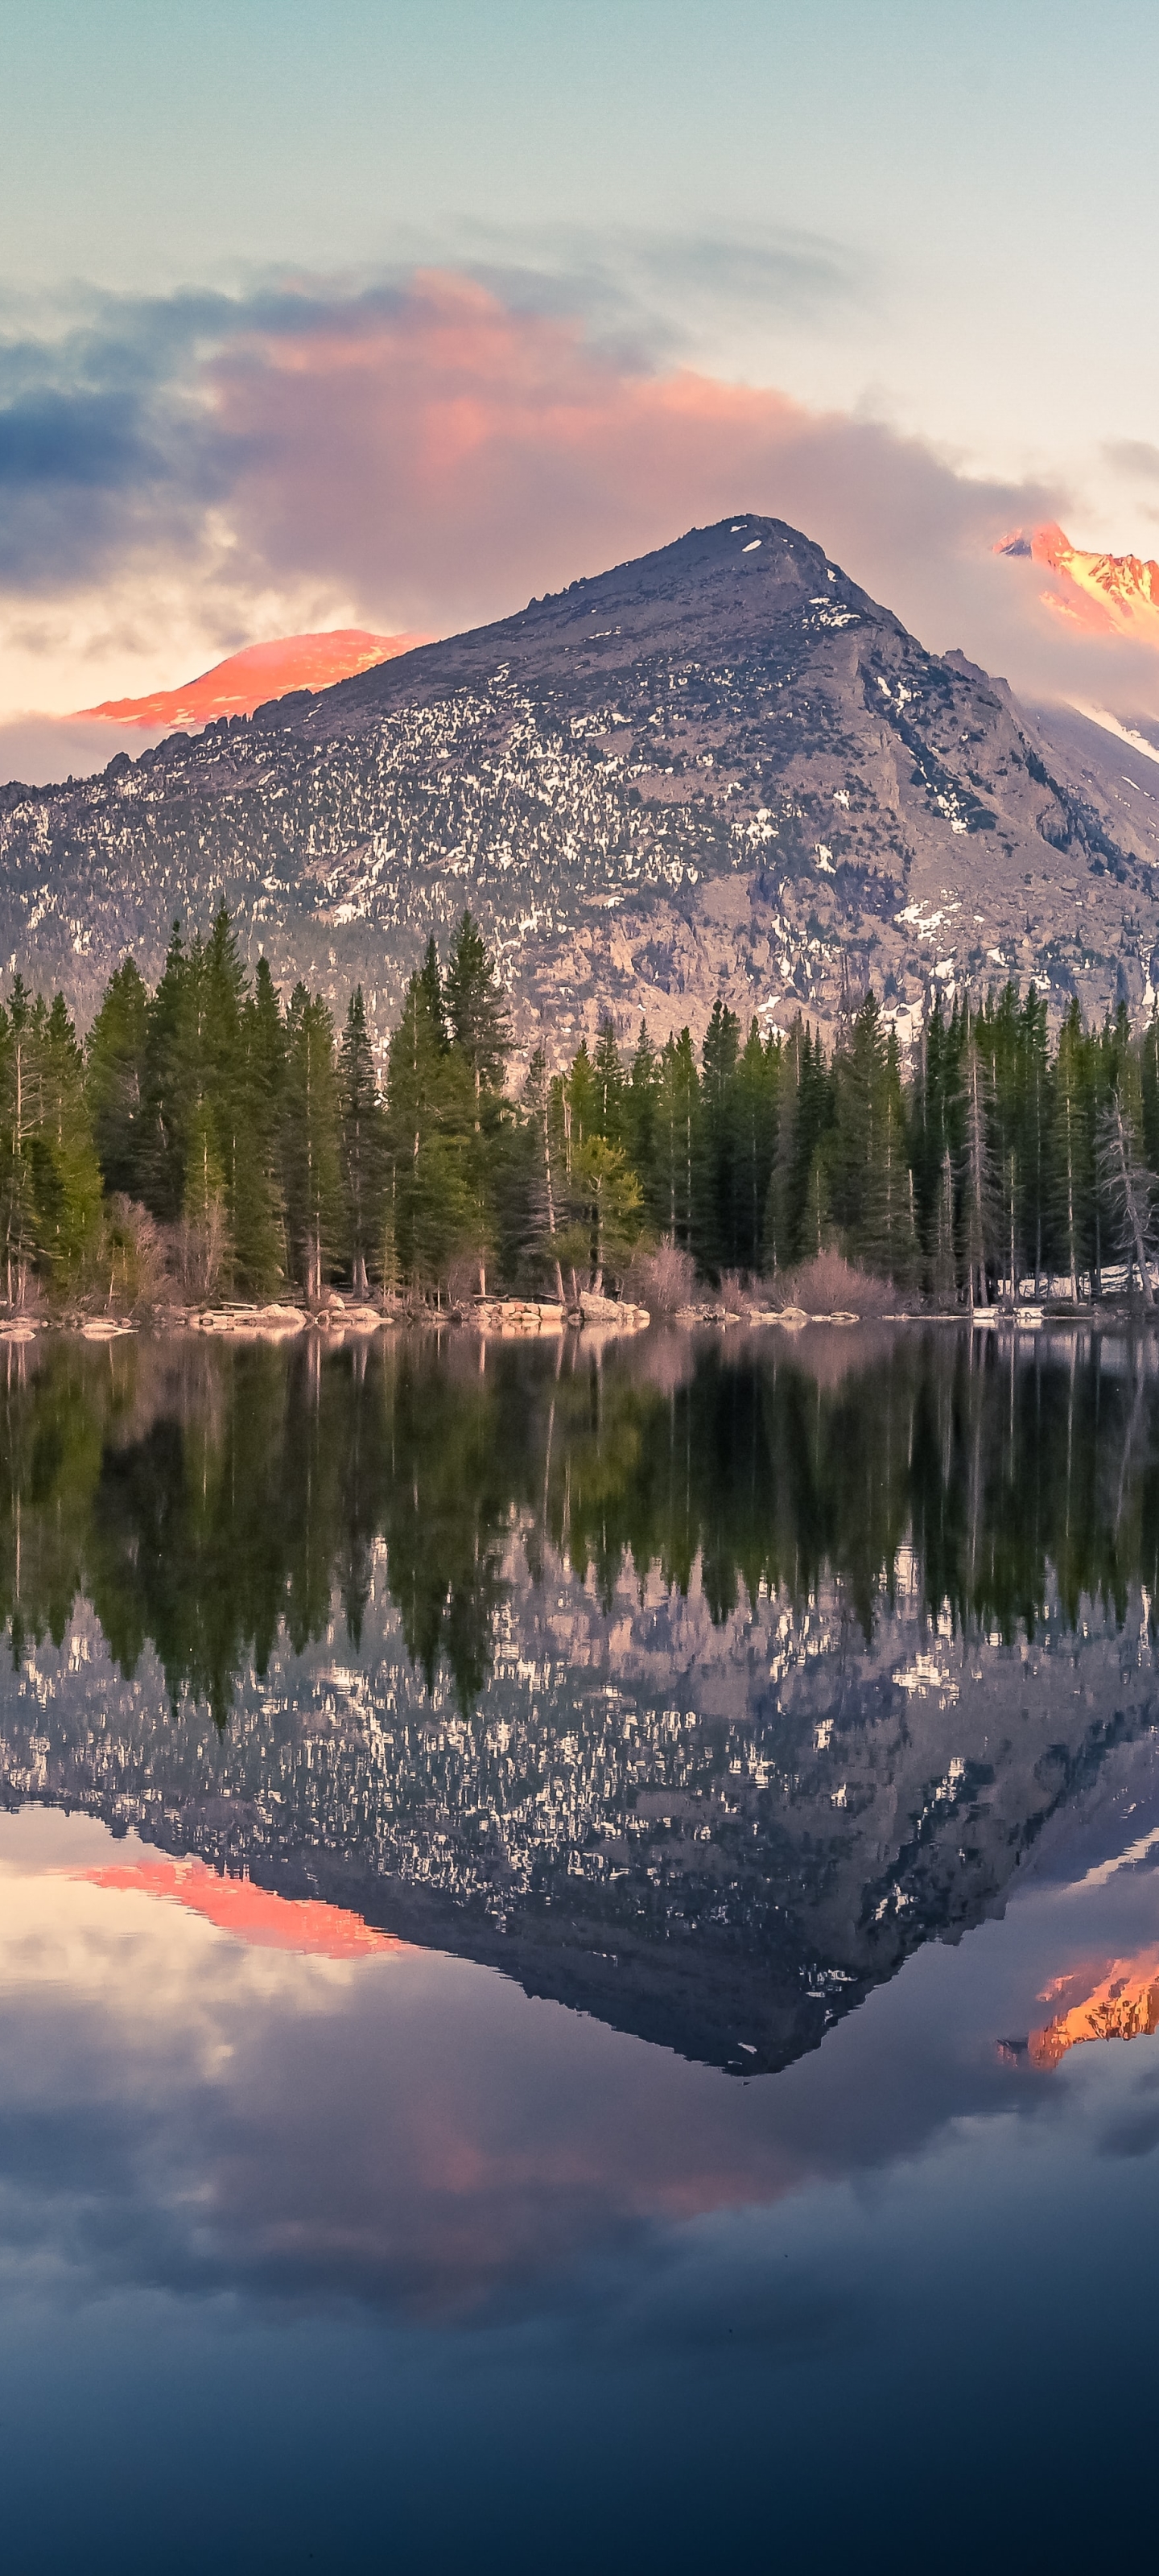 Bear Lake Reflection at Rocky Mountain National Park by Zetong Li